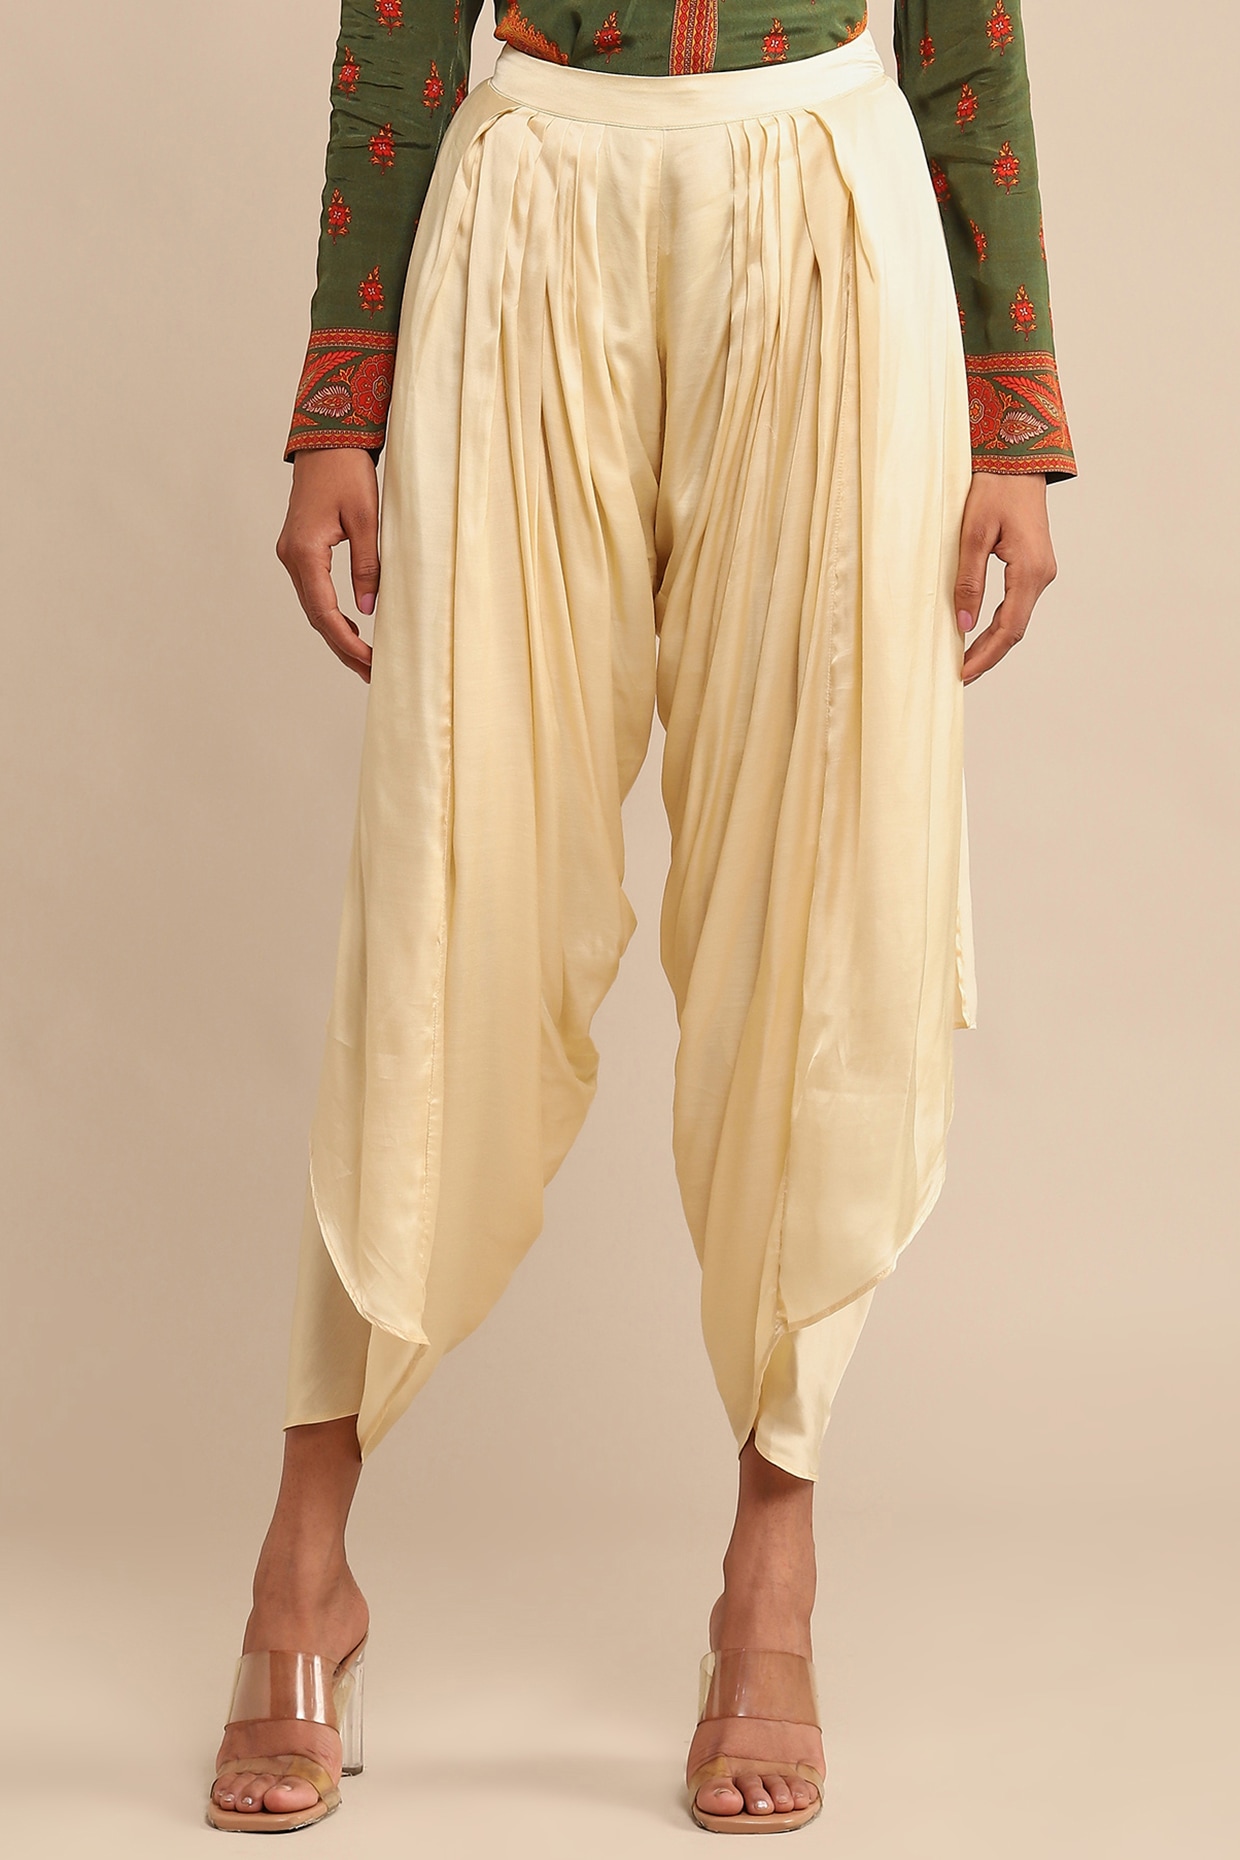 Crop top wid dhoti pant and jacket gv superb look to buy contact me on  9951711879 | Dhoti pants, Blouse work designs, Wedding lehenga designs